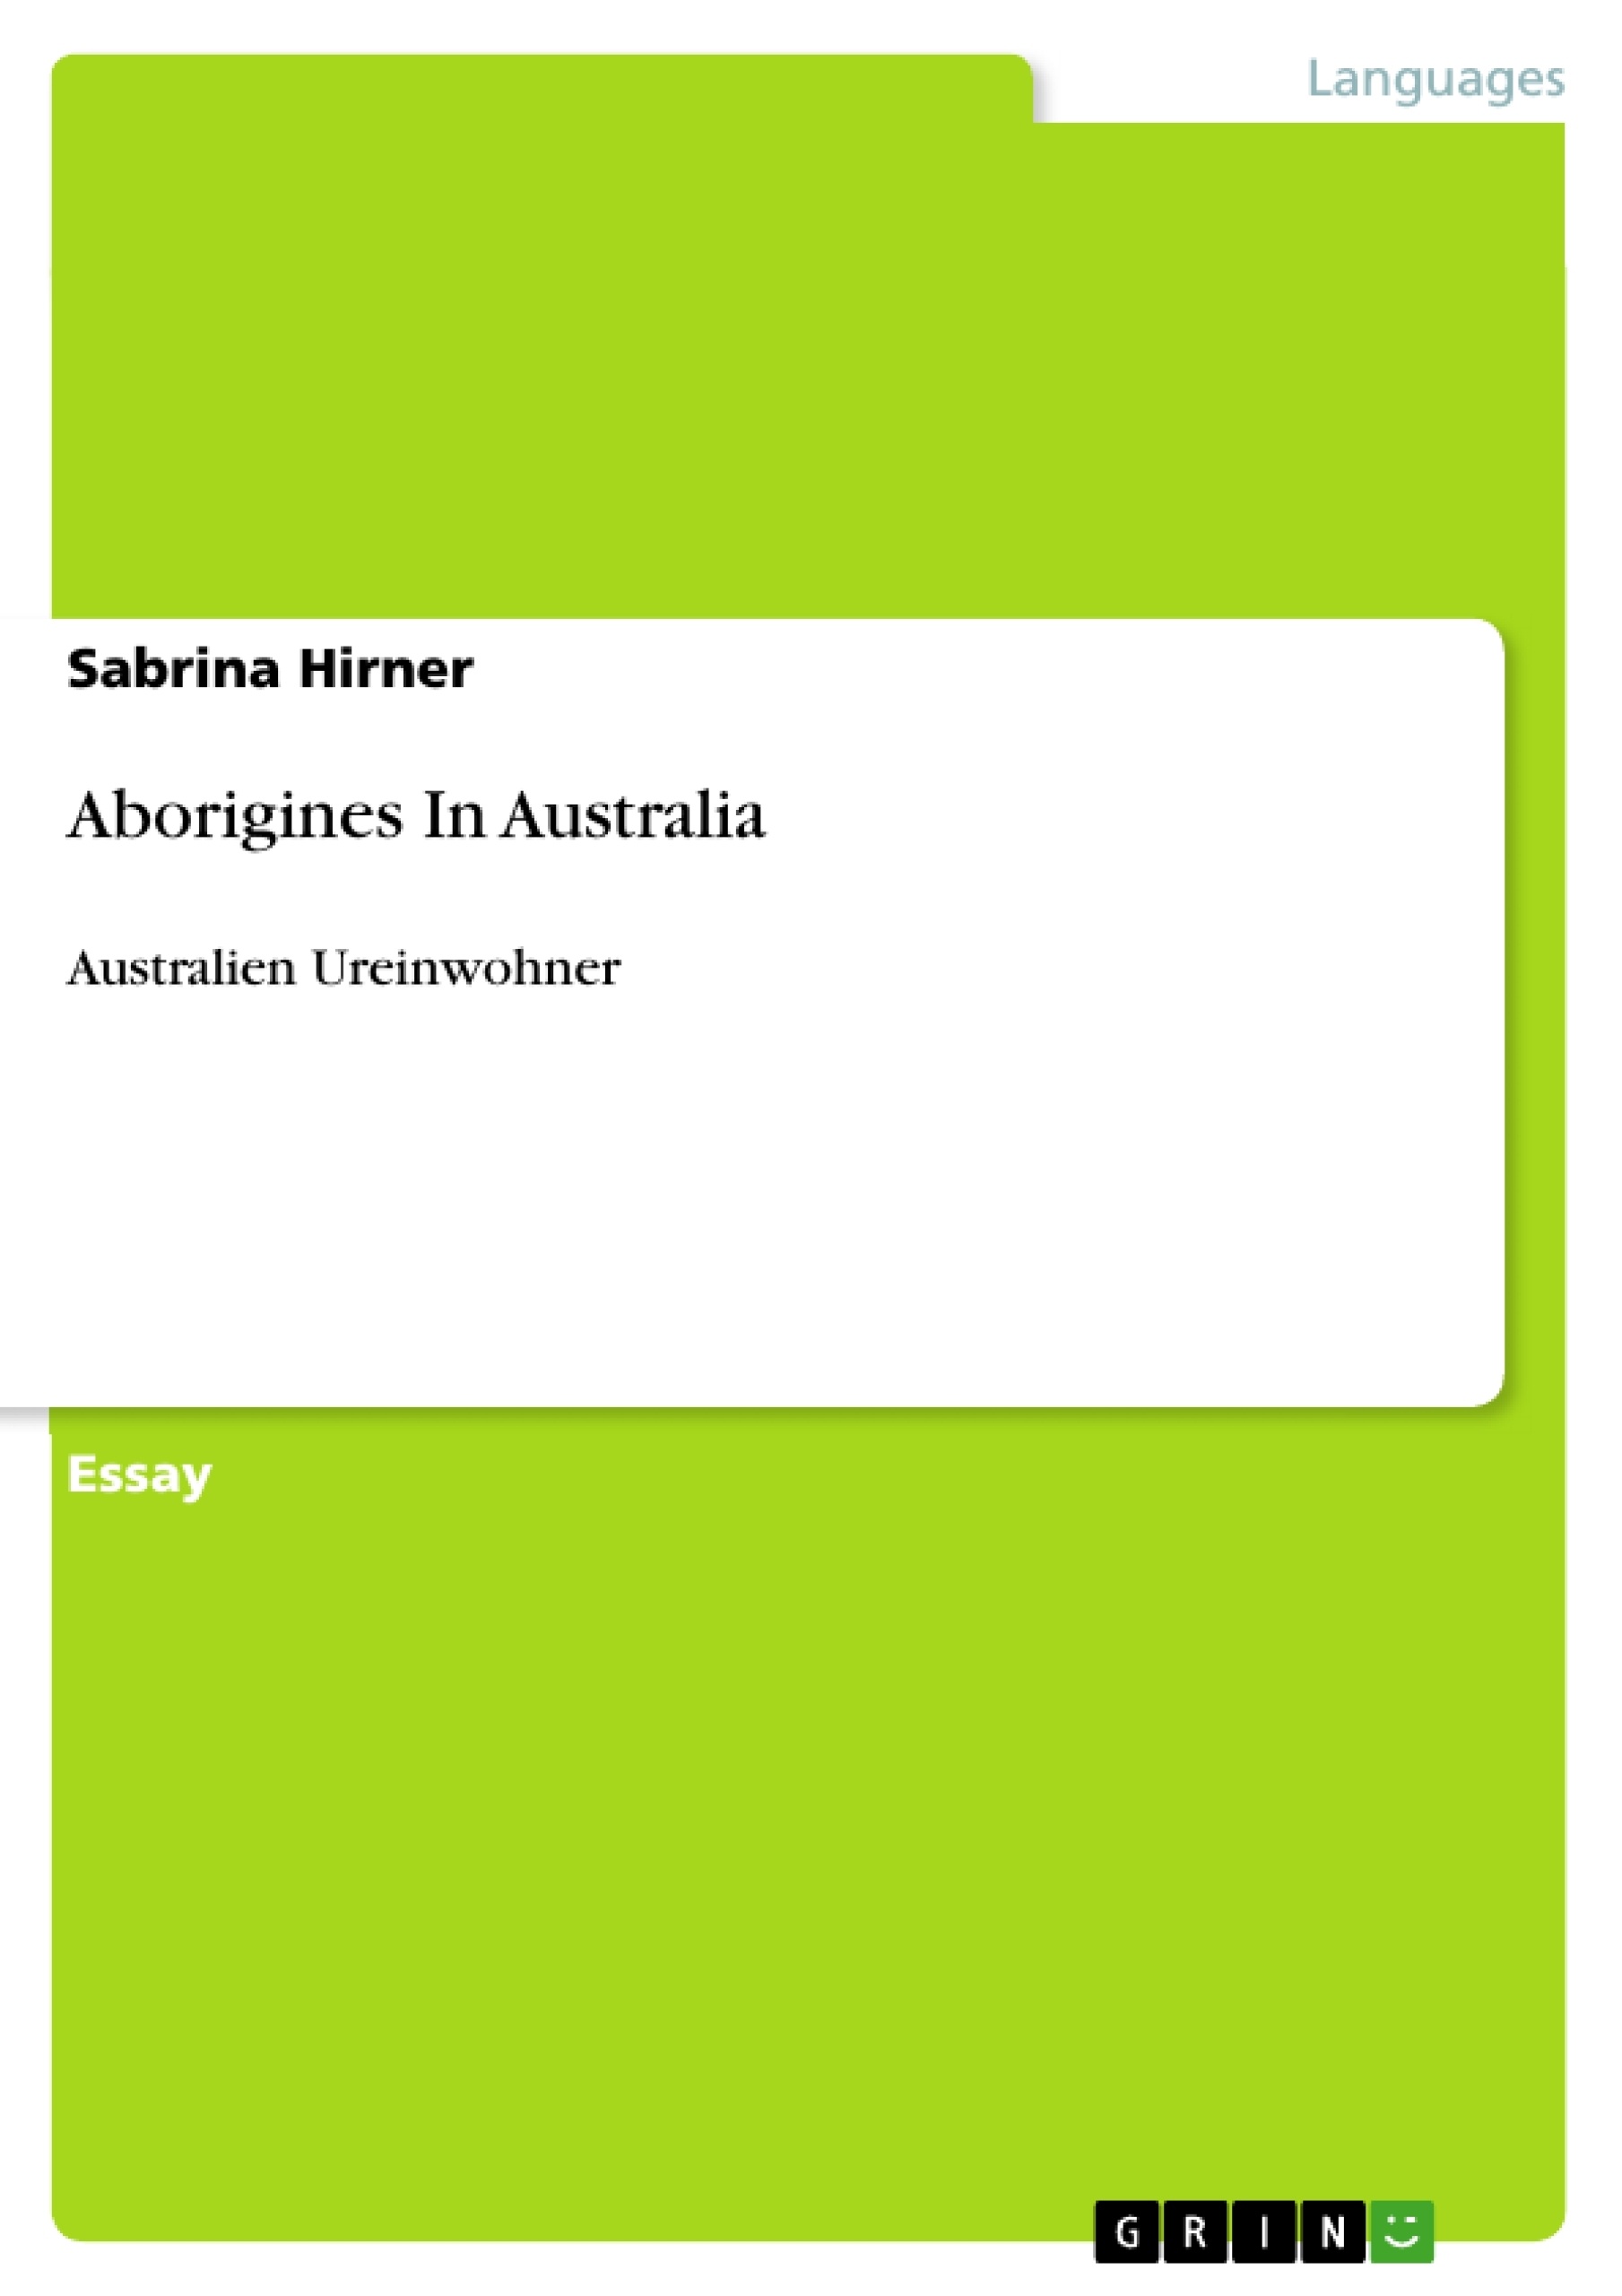 Título: Aborigines In Australia 